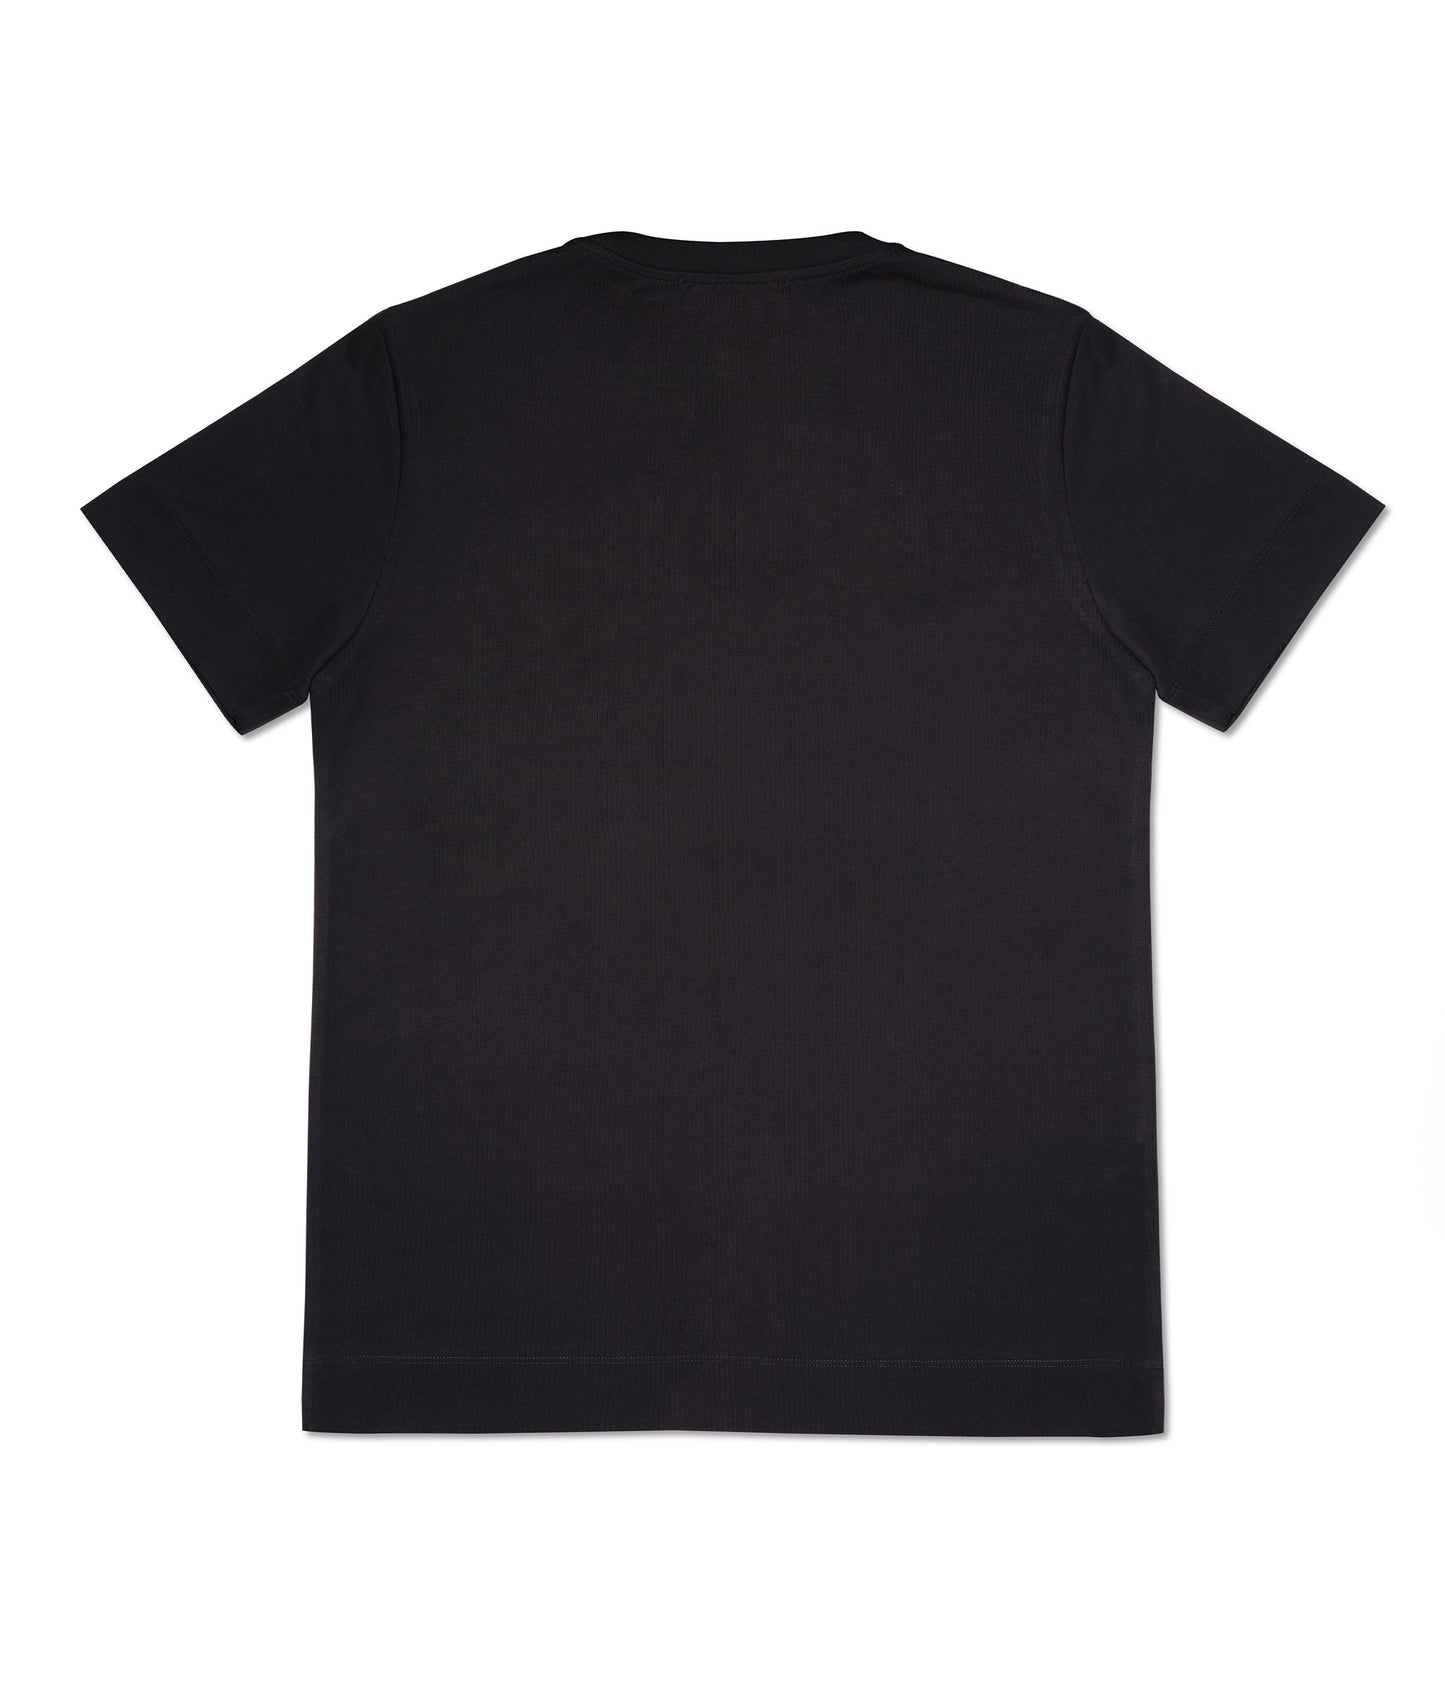 'Keep it Burning' Black T-Shirt Men